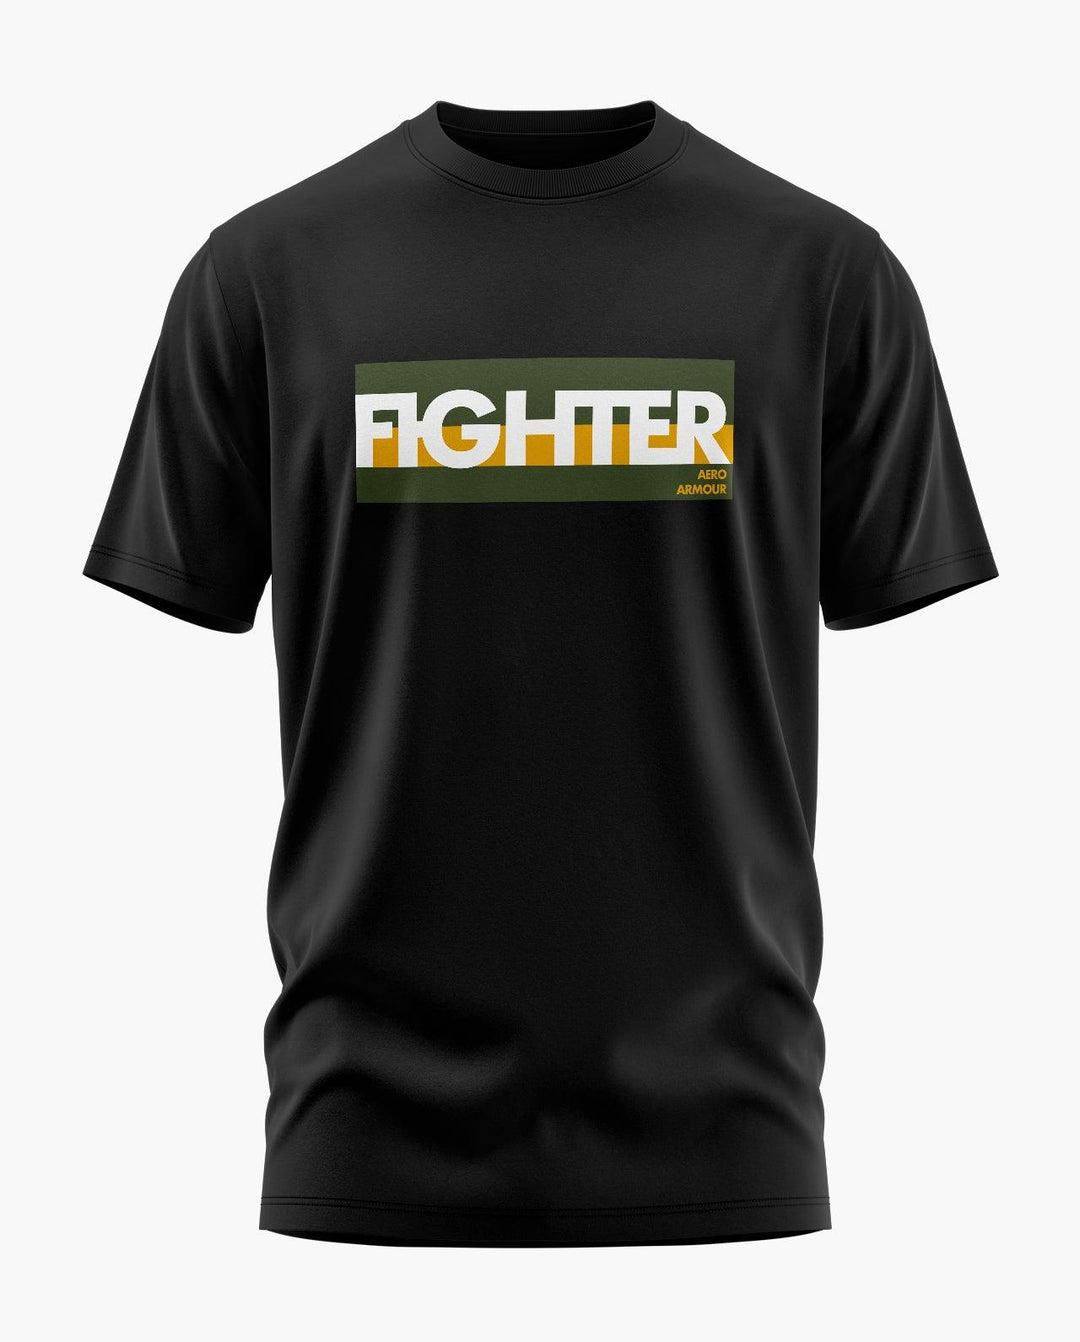 Fighter T-Shirt - Aero Armour